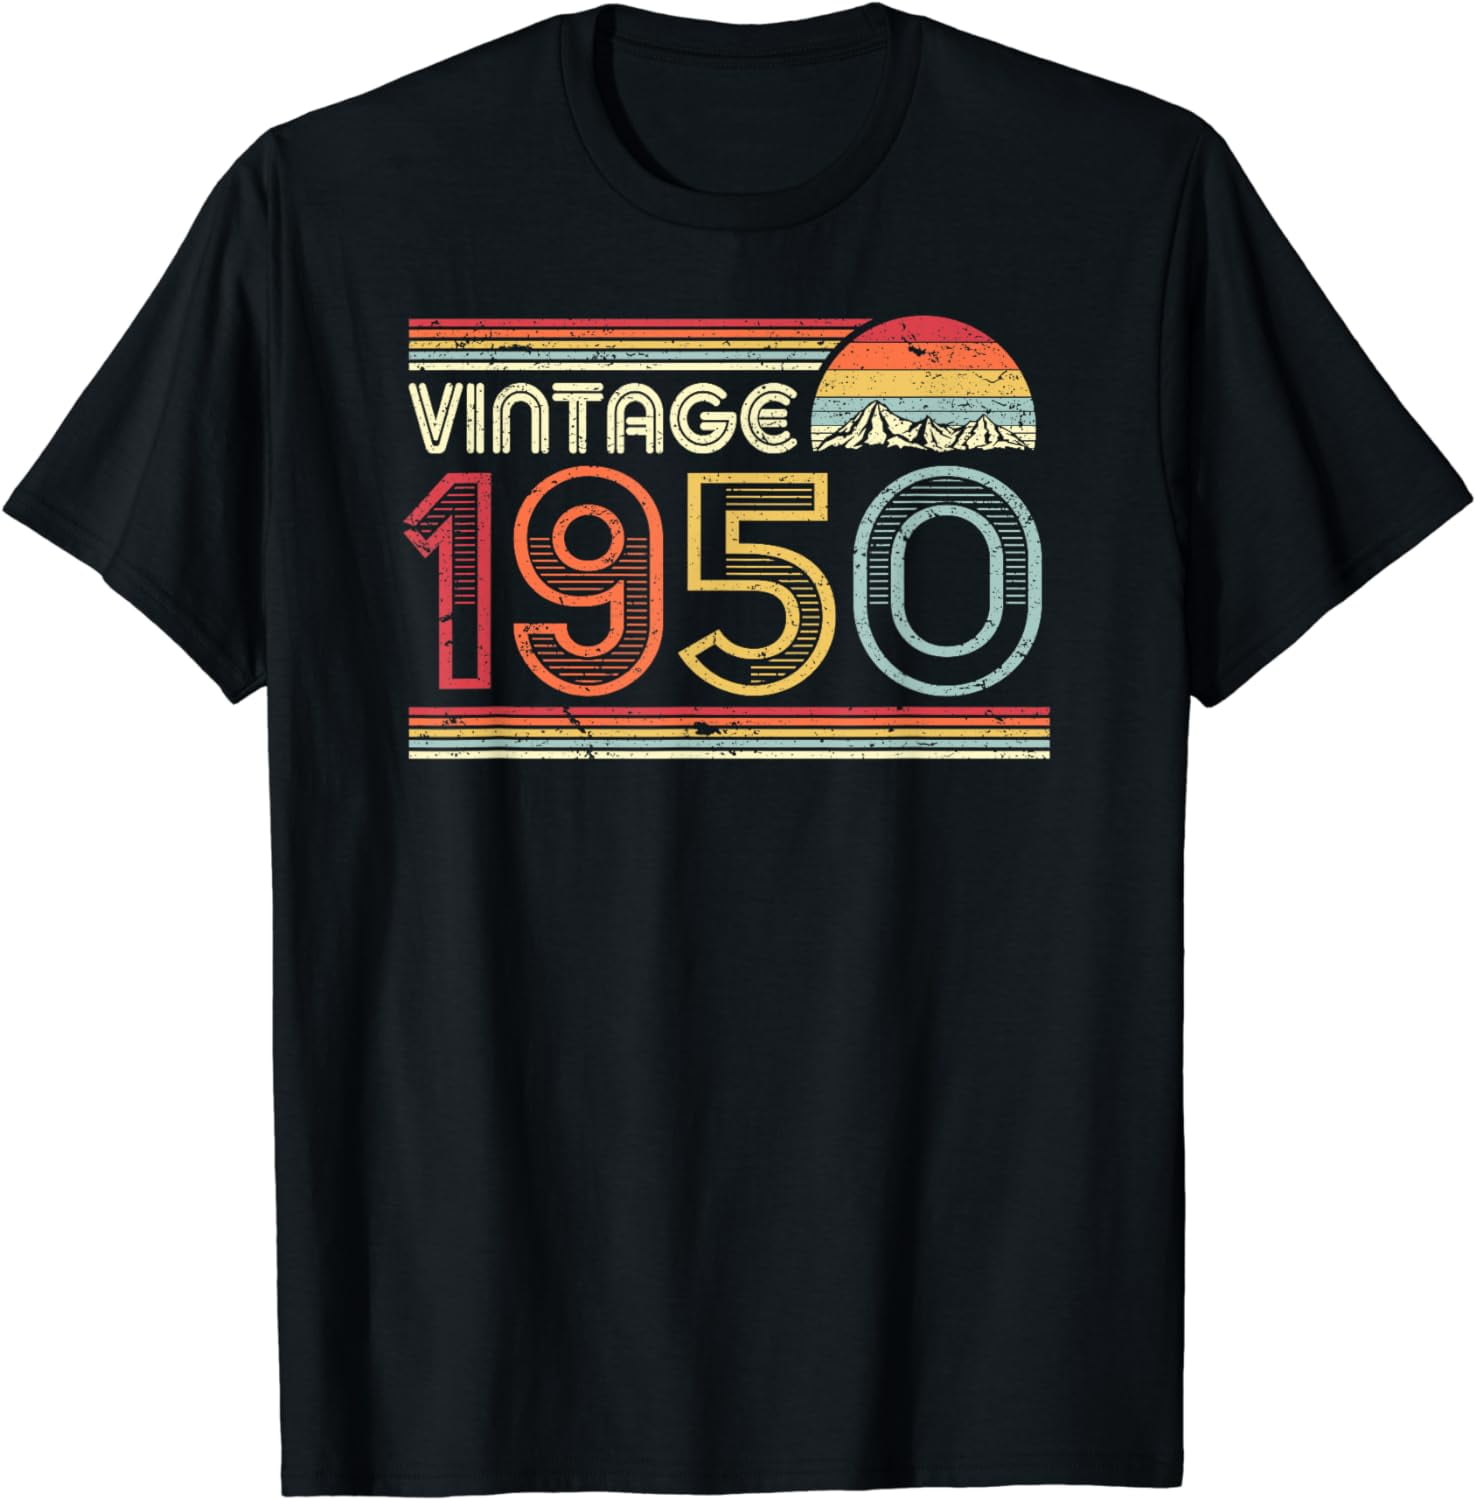 70th Birthday Gift T Shirt. Classic, Vintage 1950 T-Shirt - Walmart.com